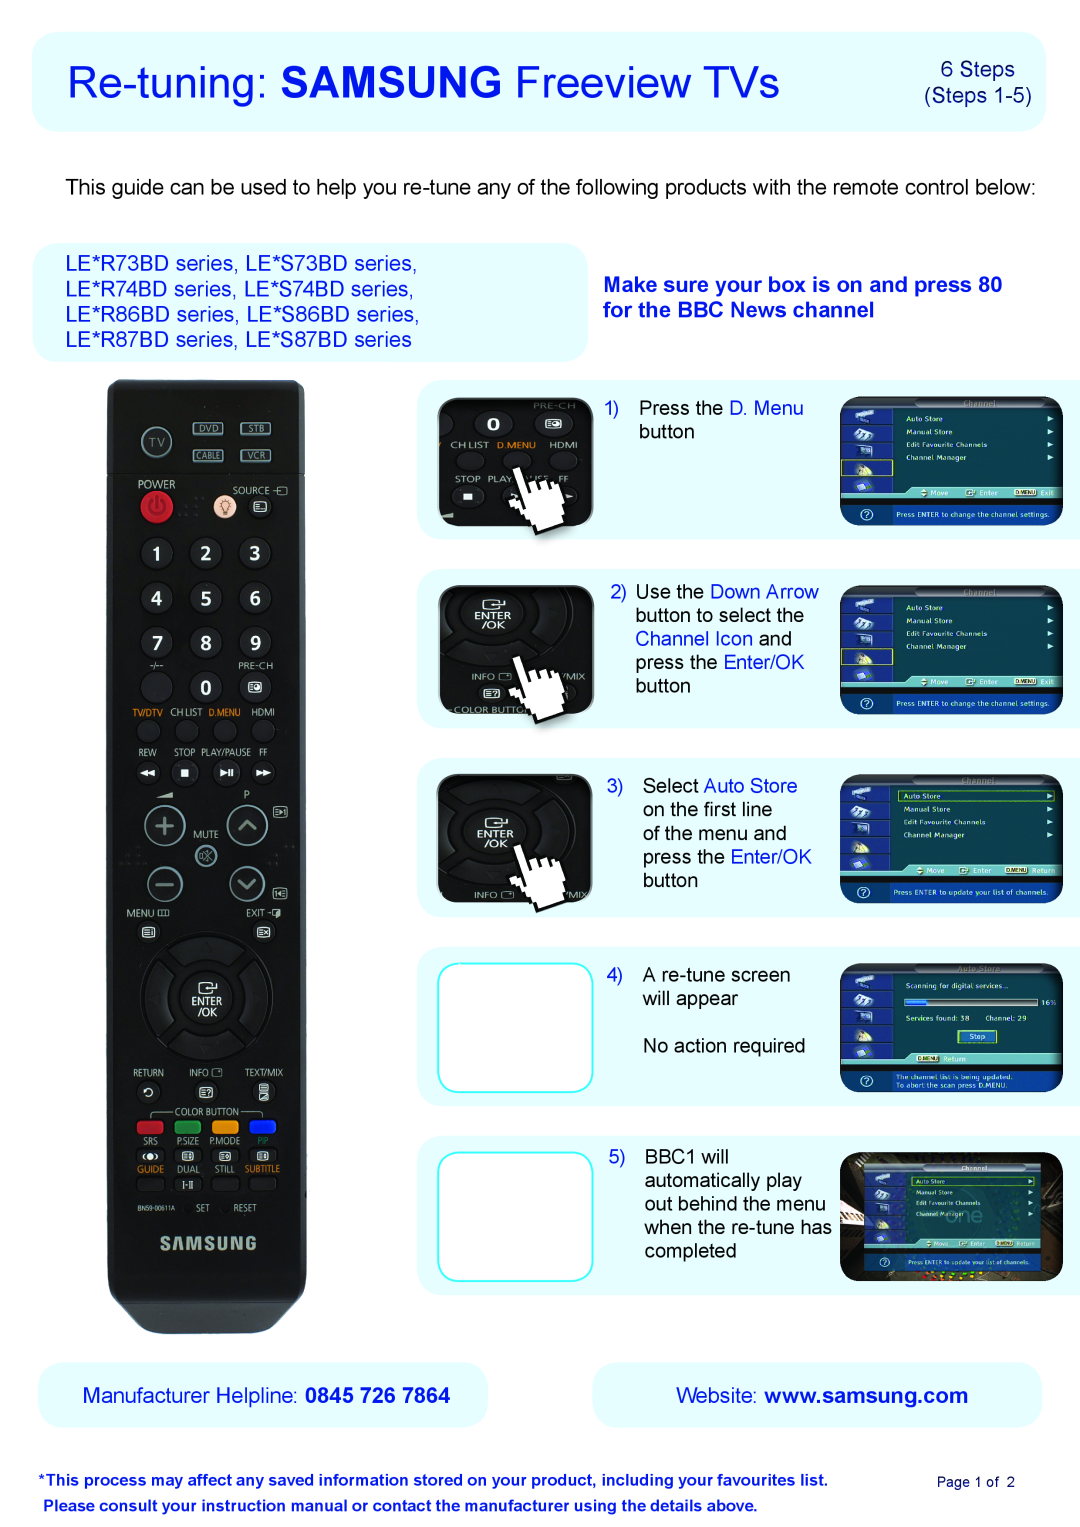 Samsung LE*S87BD, LE*S86BD instruction manual Re-tuning SAMSUNG Freeview TVs, Steps Steps, Manufacturer Helpline 0845 726 